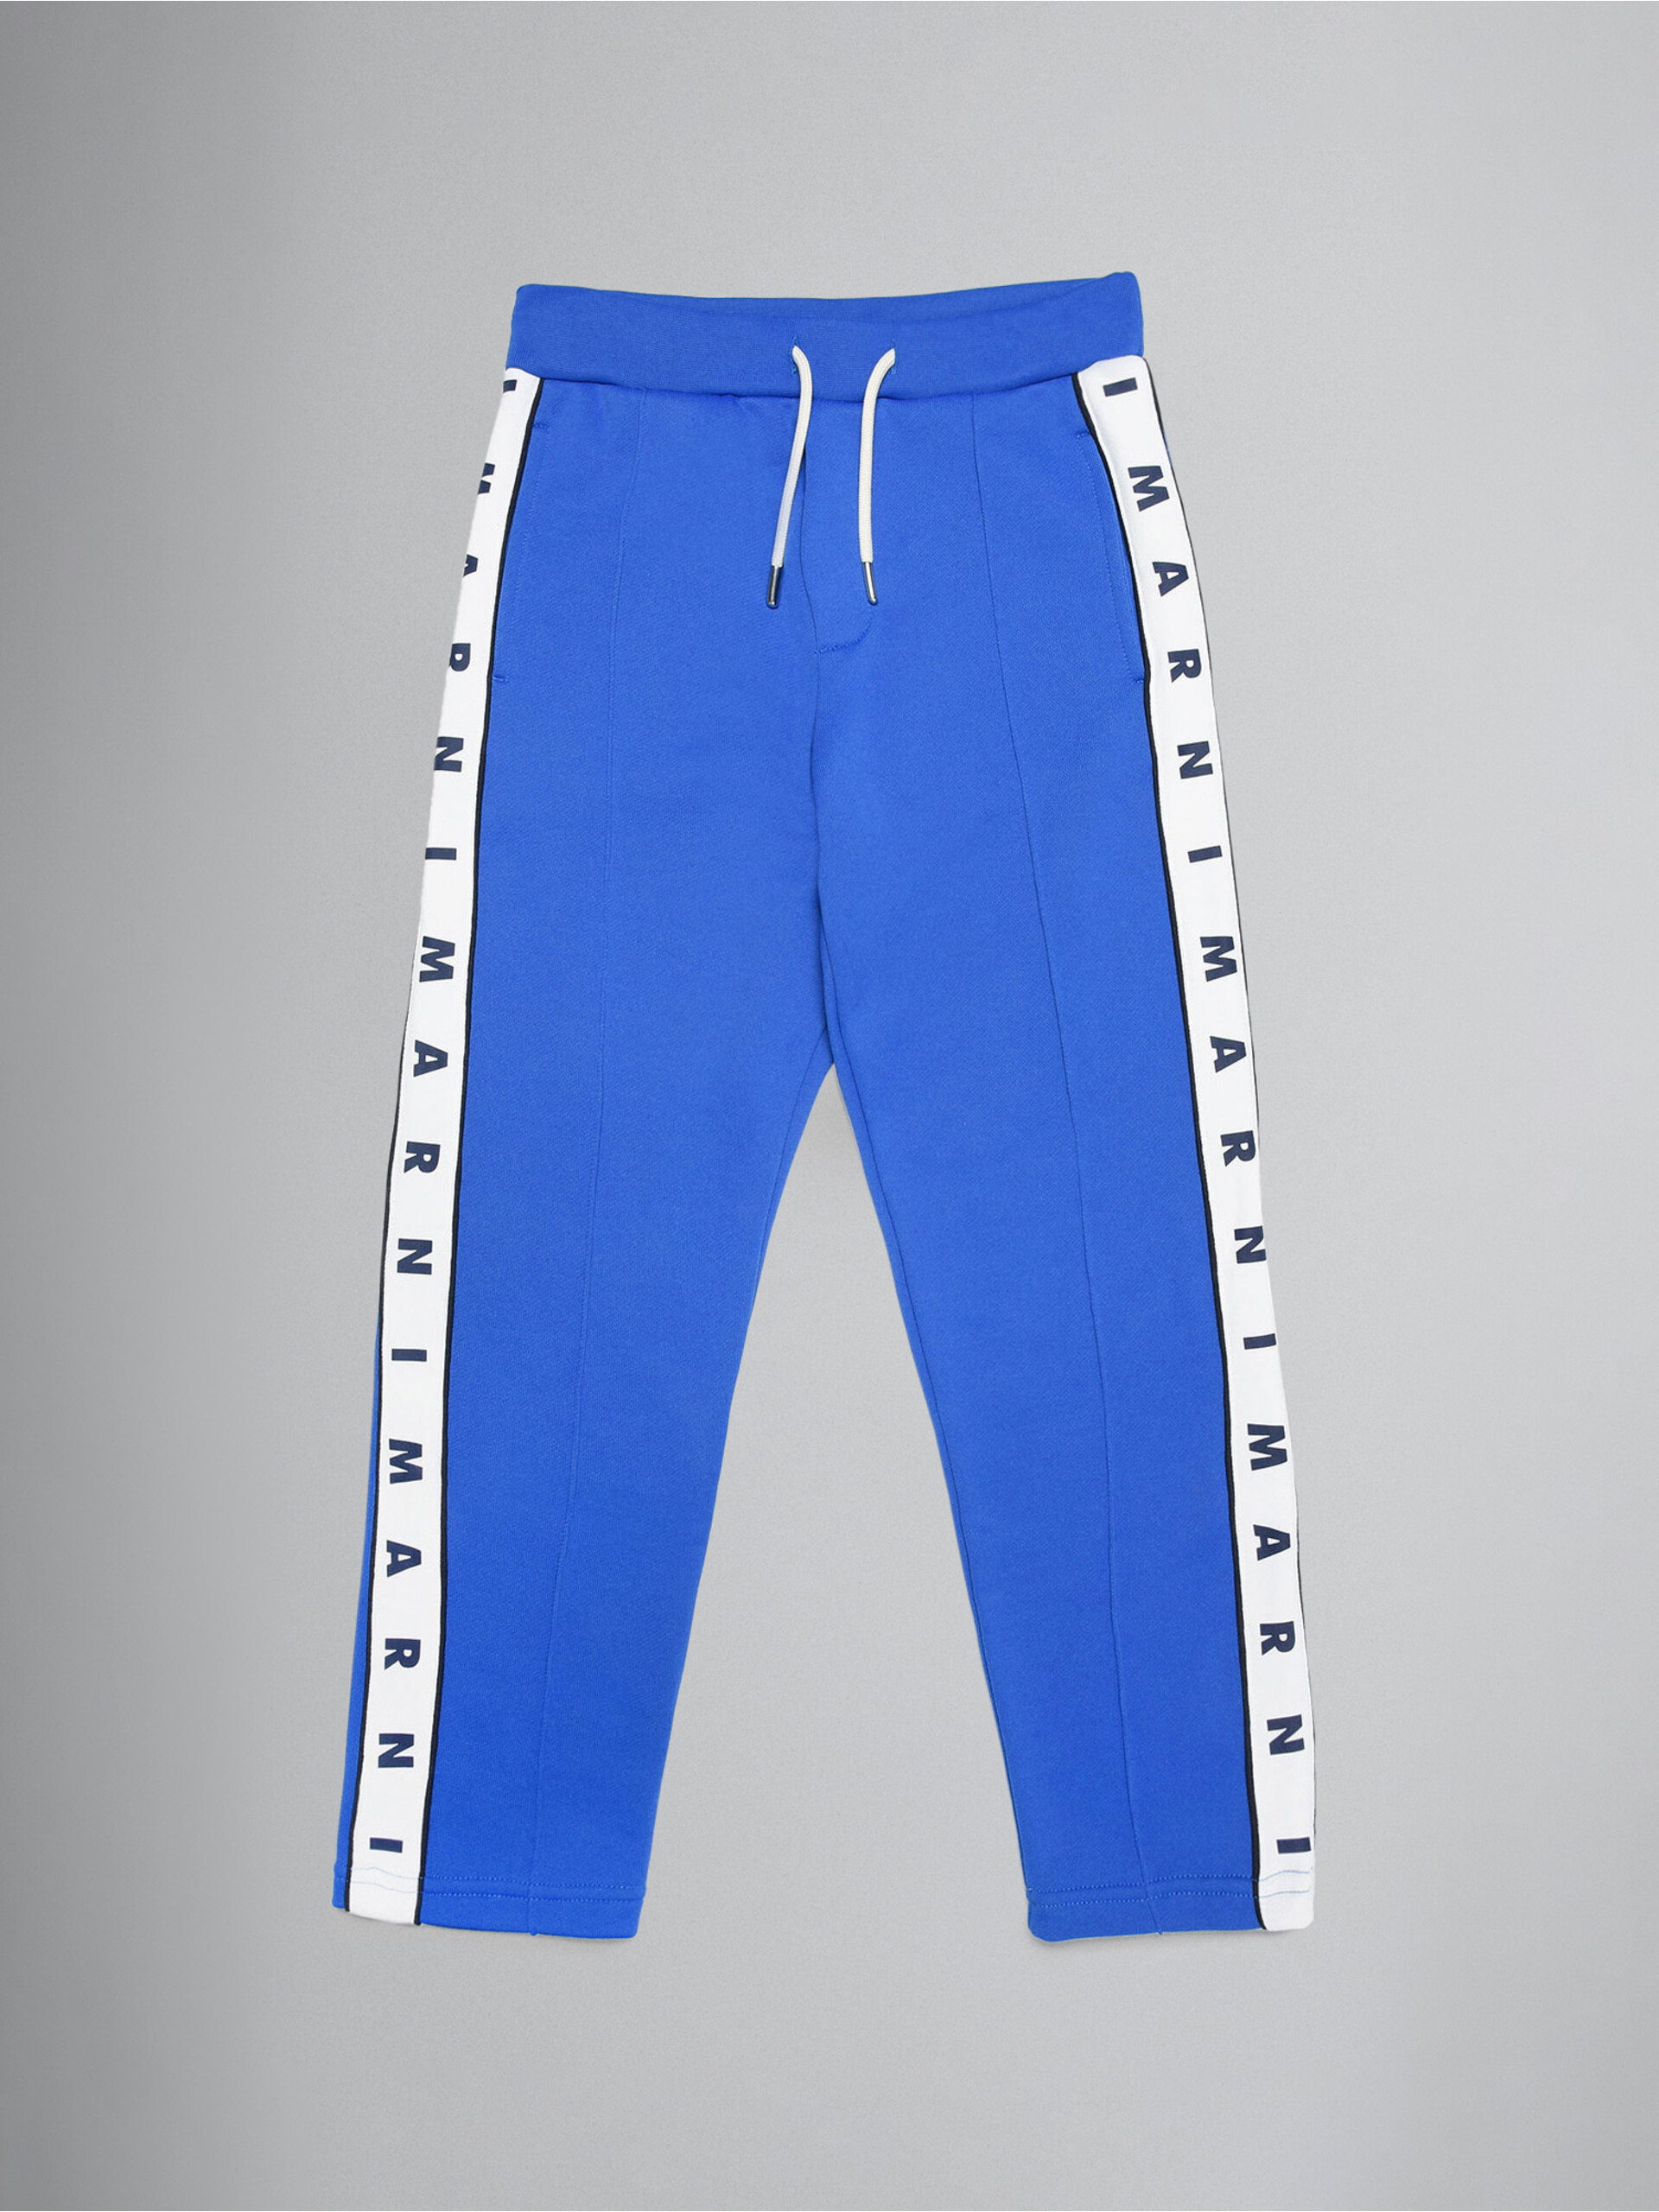 Blue technical fleece pants with logo tape - Pants - Image 1